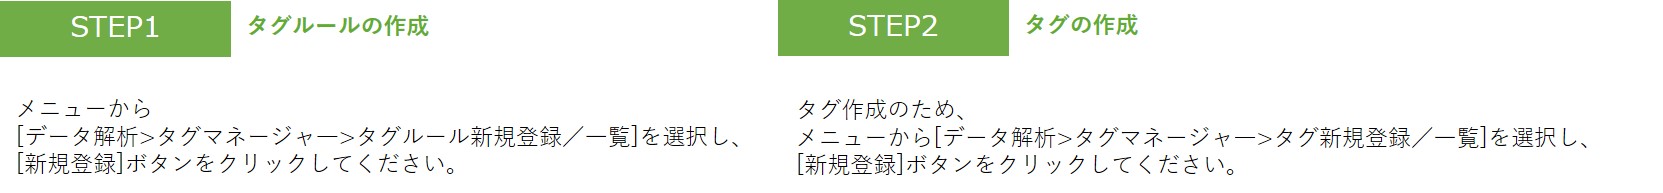 step2-3